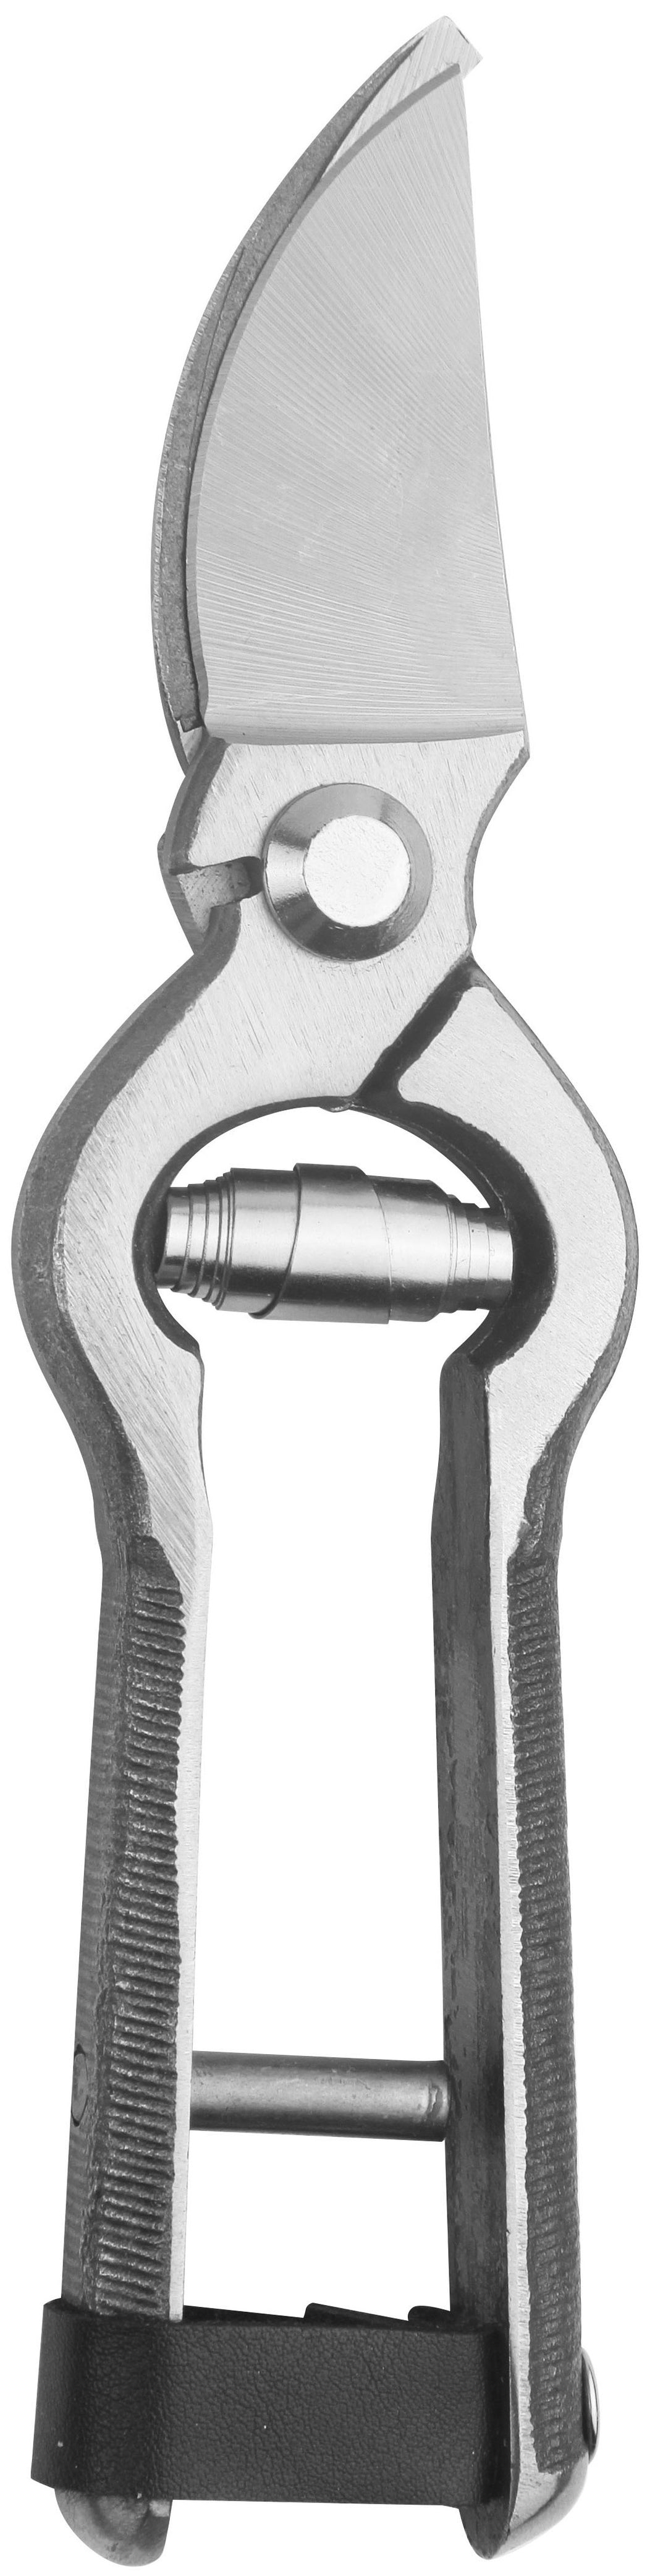 Vinka Steel Pruning Secateur Item Code VAPS-018 Heavy Duty Bypass Type Sharp Blade